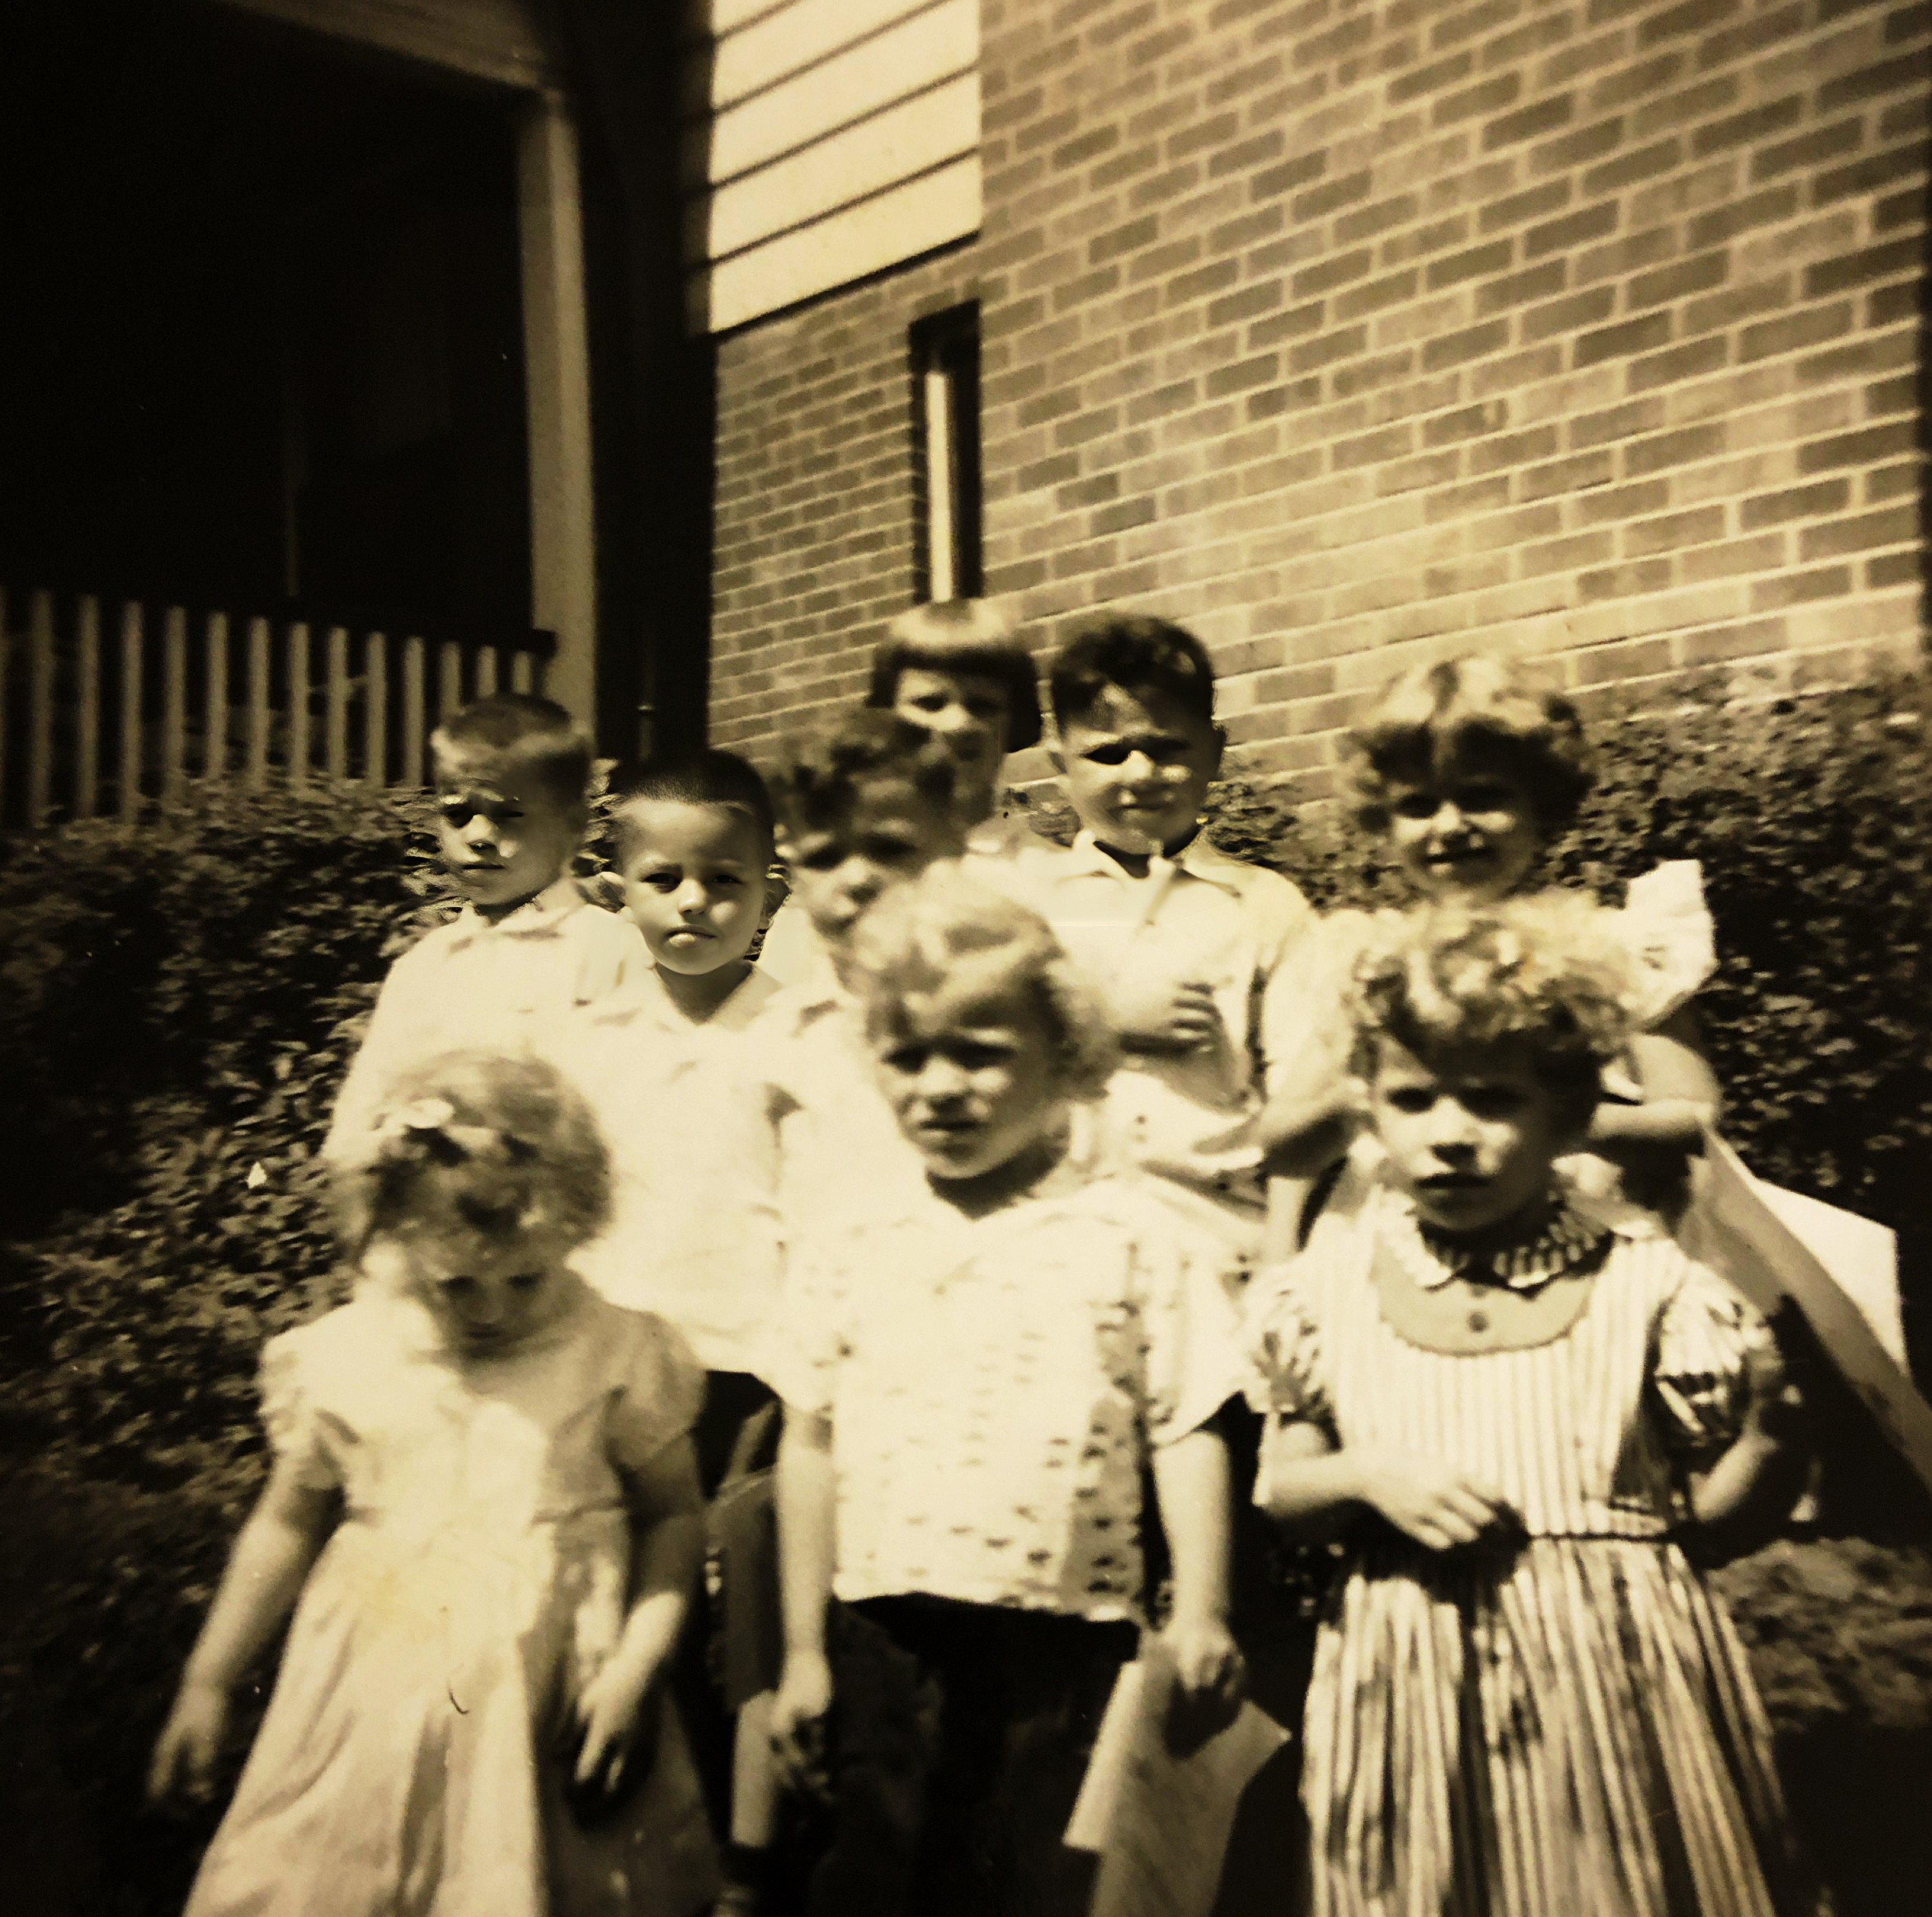 The Children’s Home, 141 Oakland Avenue, Uniontown, PA. 1957-1958